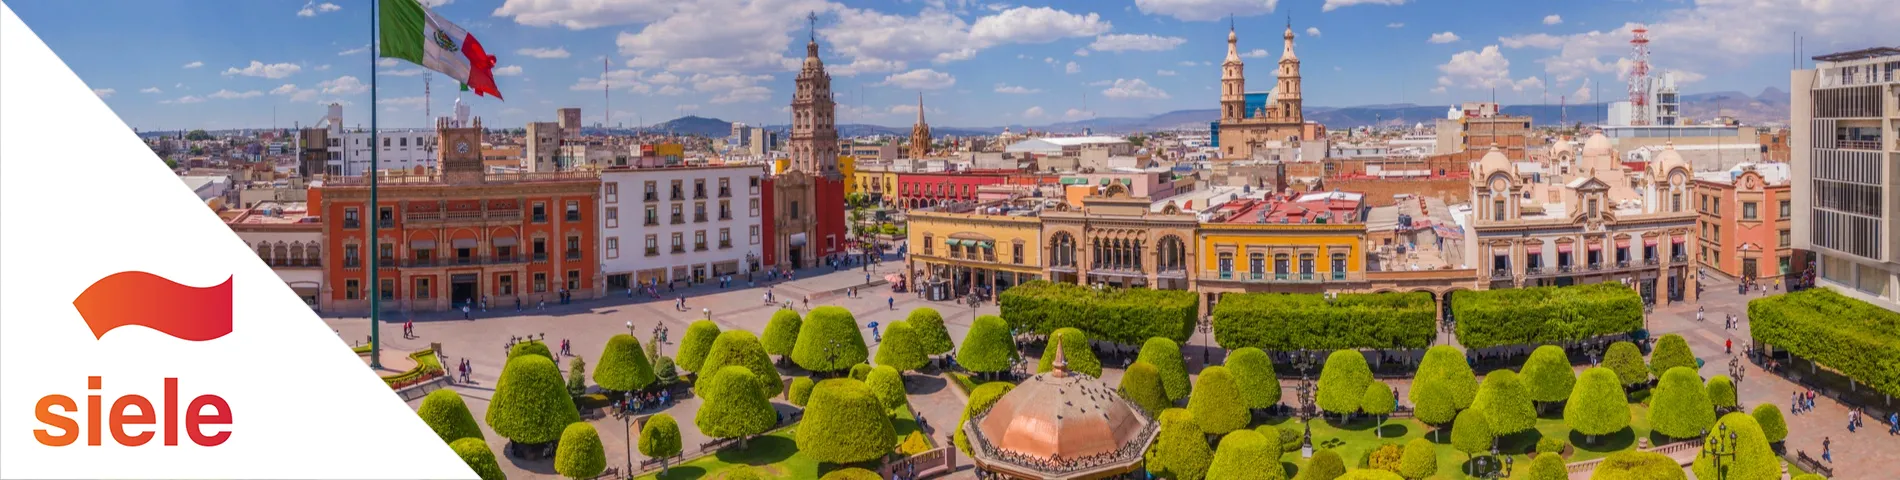 Guanajuato - SIELE